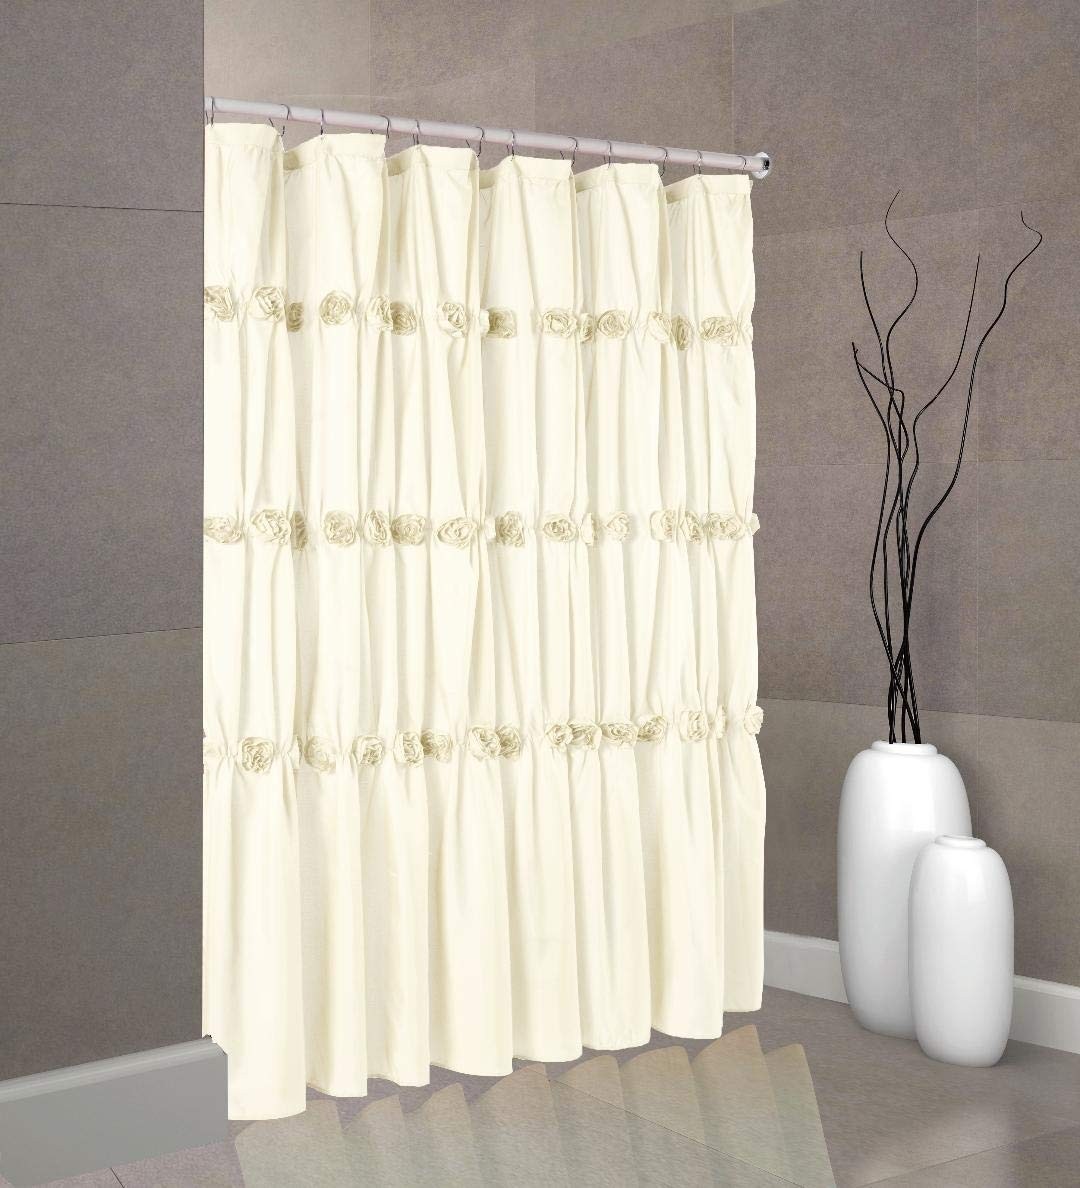 Rose garden toile bathroom shower curtain ivory